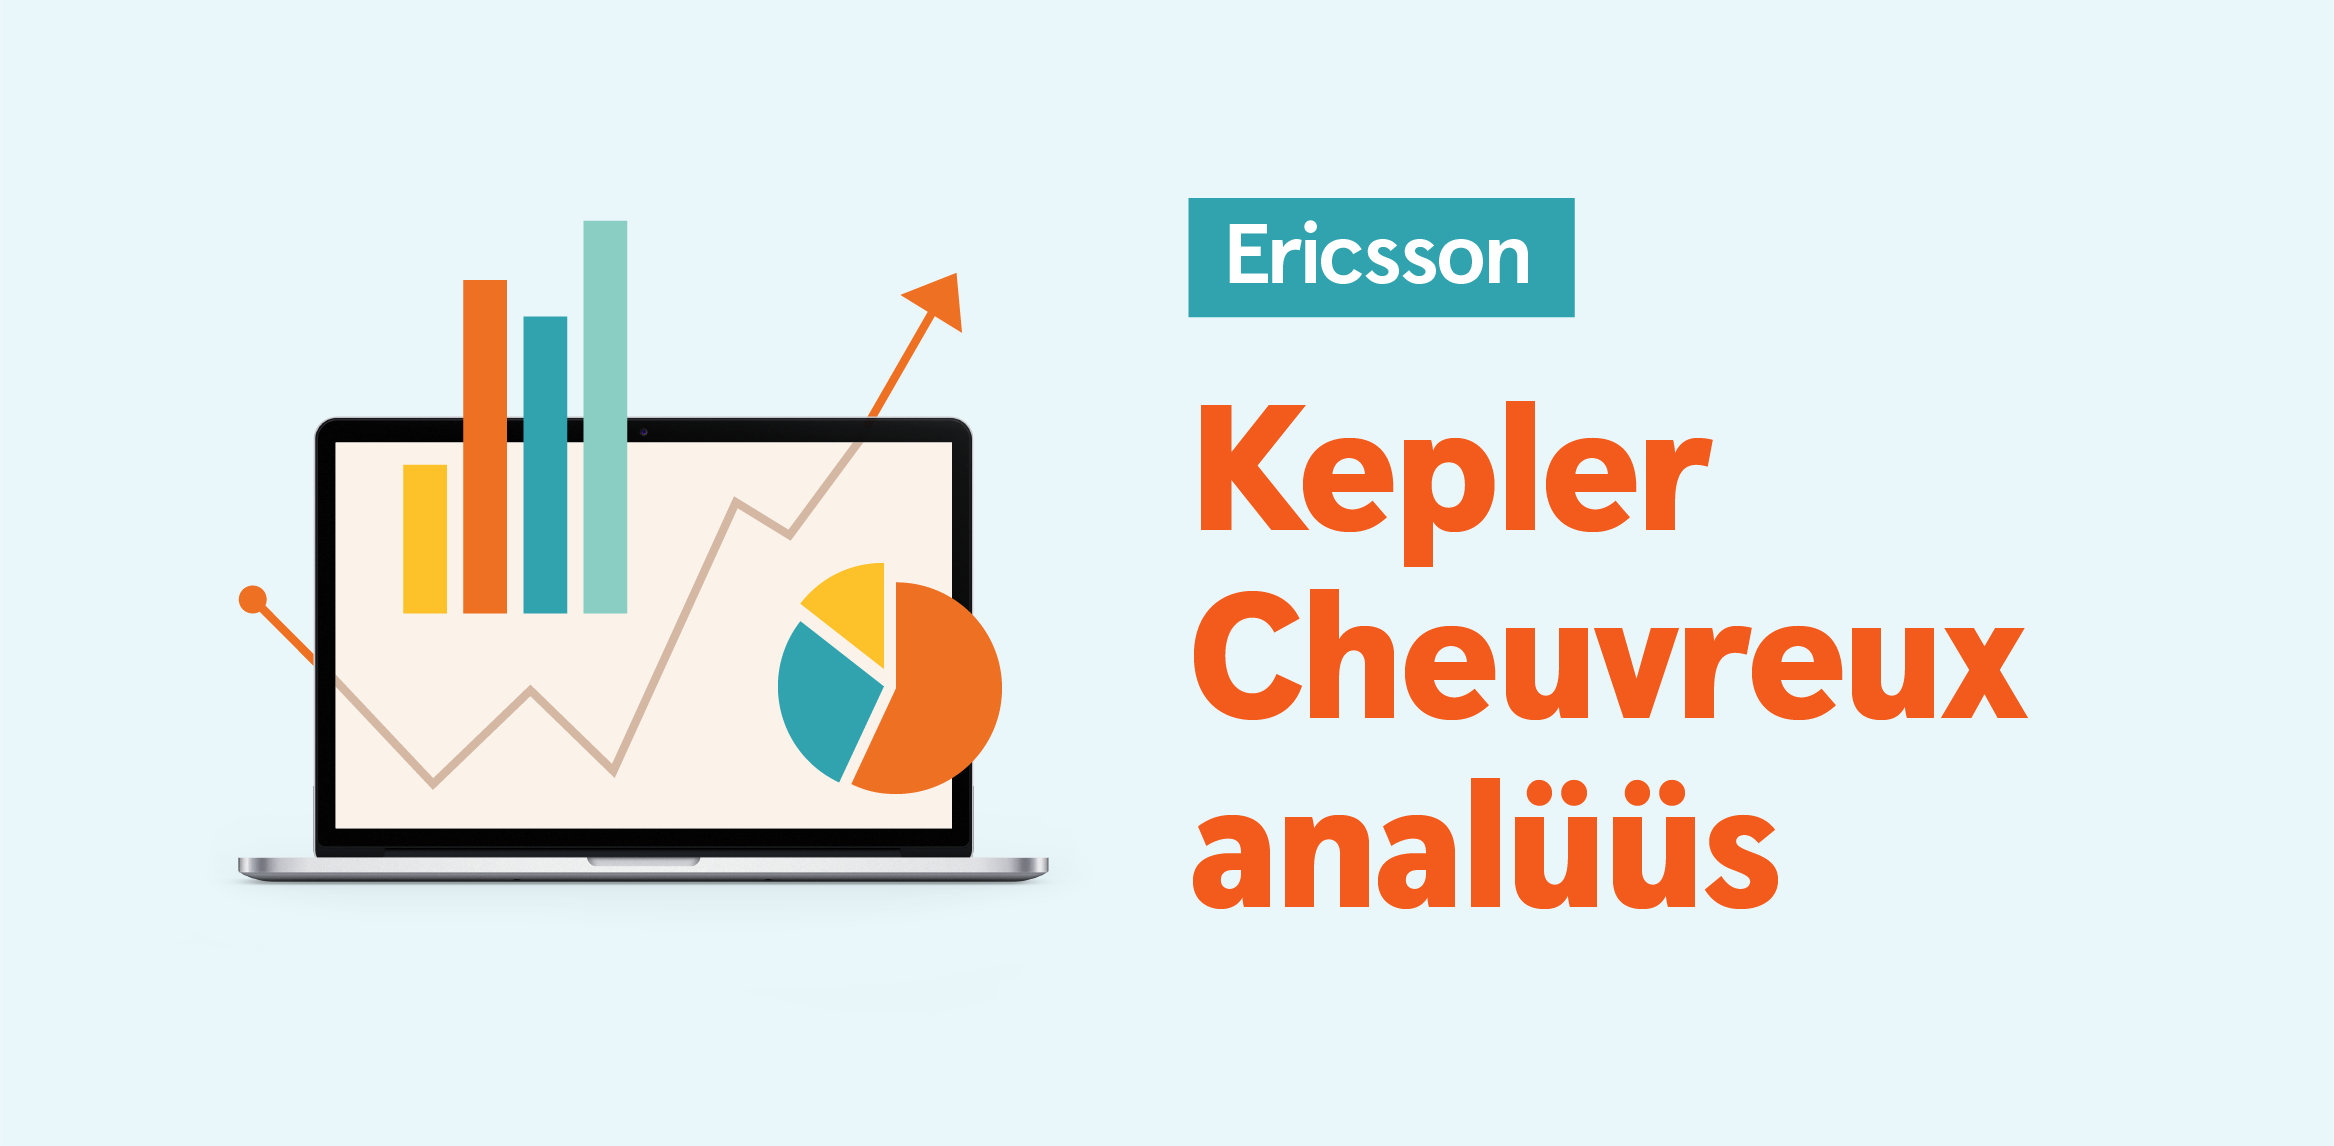 Kepler Cheuvreux: Ericssonilt tugevad tulemused